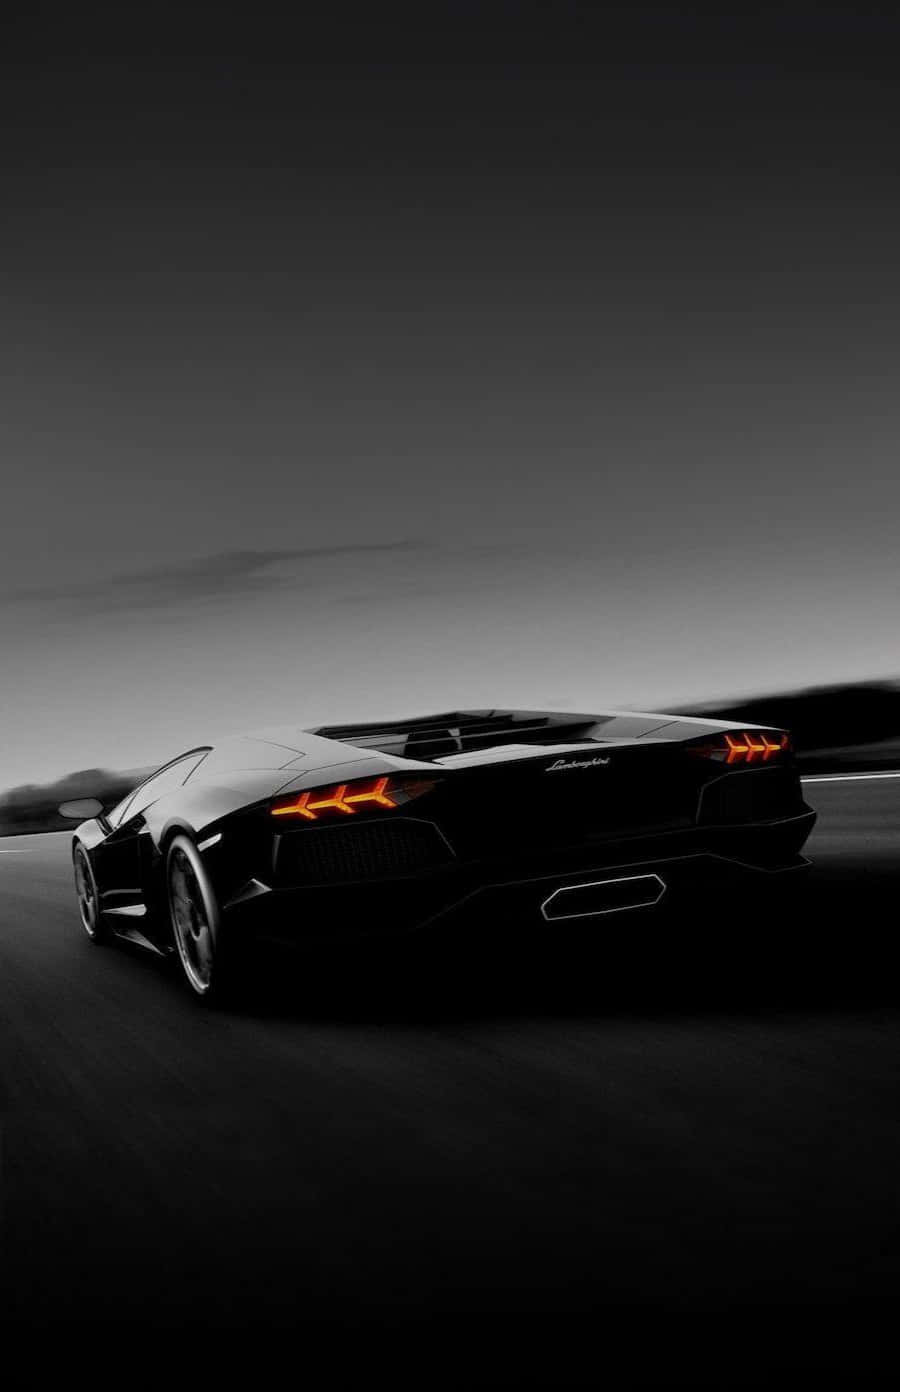 Cruise down the Autobahn in style in a Black Lamborghini. Wallpaper